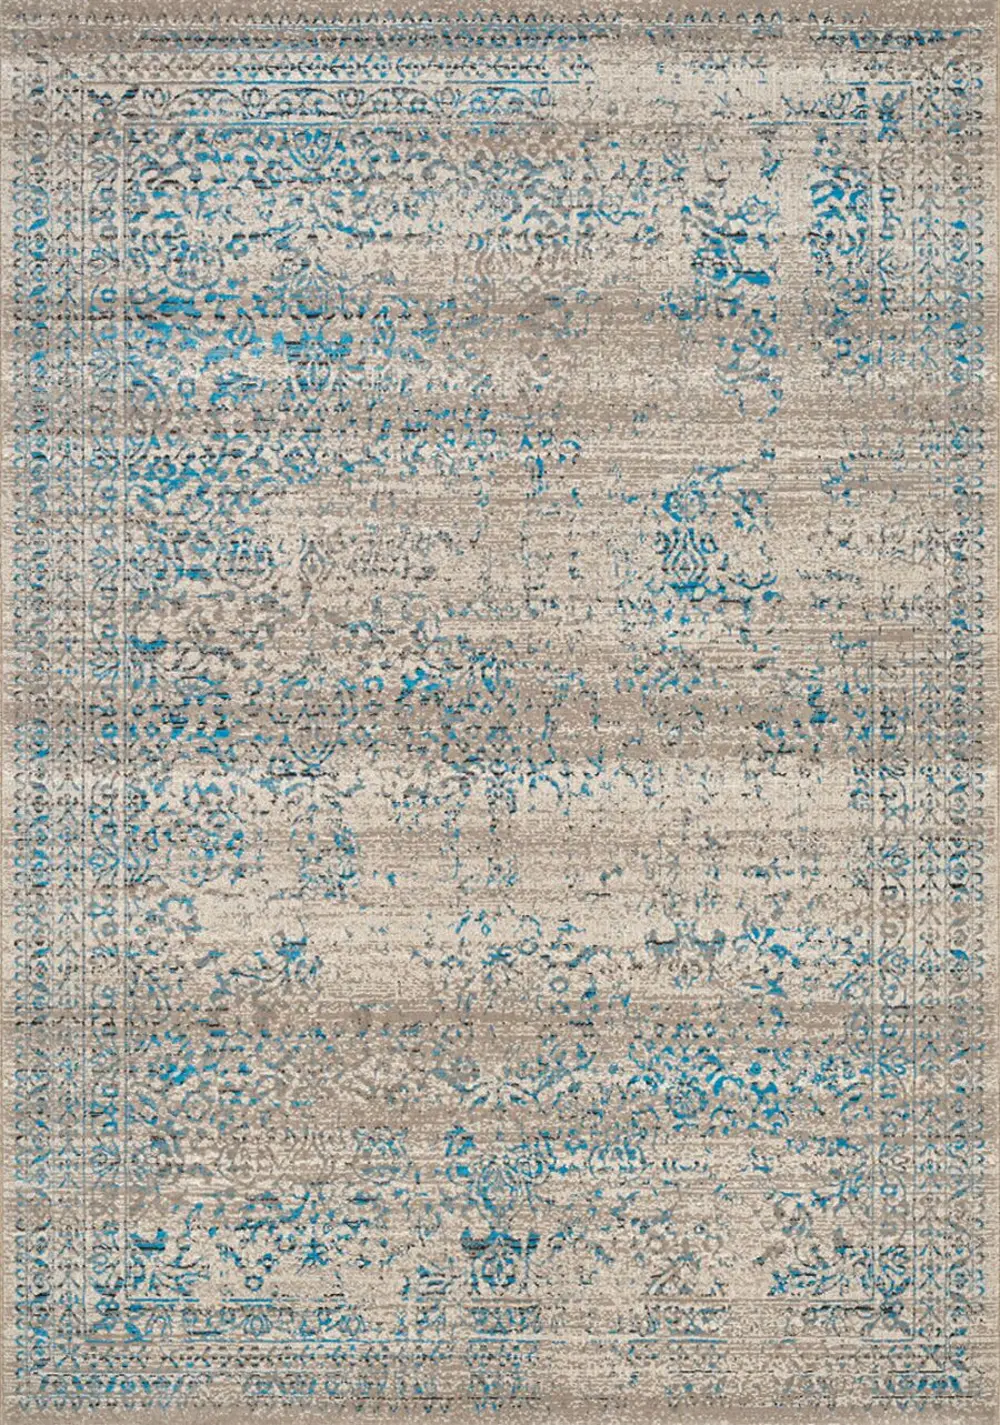 5 x 8 Medium Distressed Gray and Blue Rug - Parlour-1